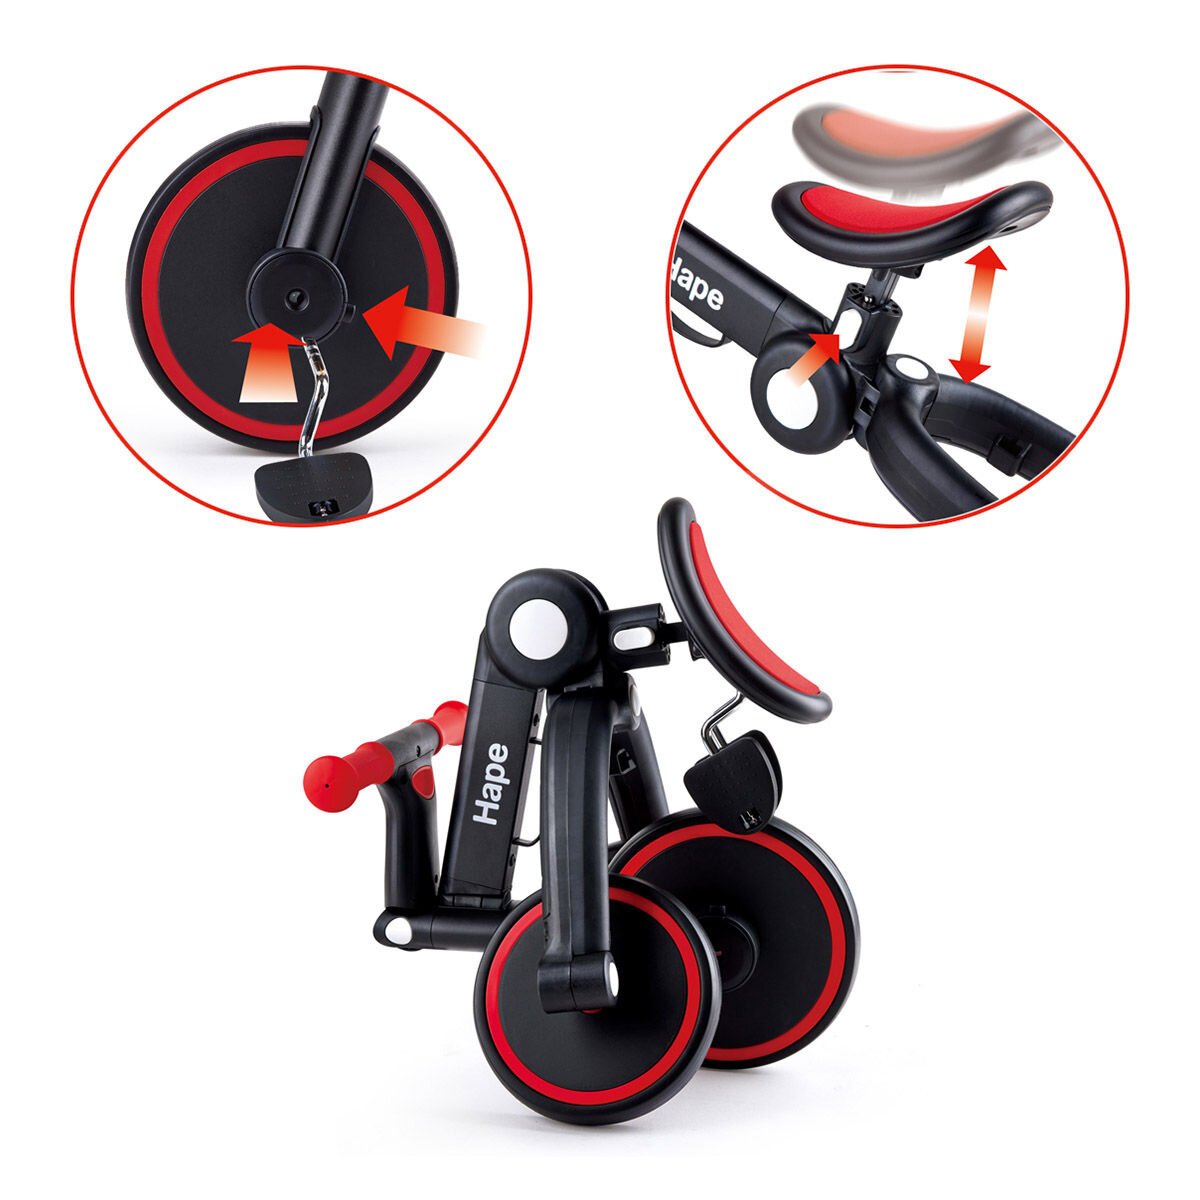 Hape Multifunctional Transforming Rider 多功能滑步車模式+三輪車模式 紅黑色